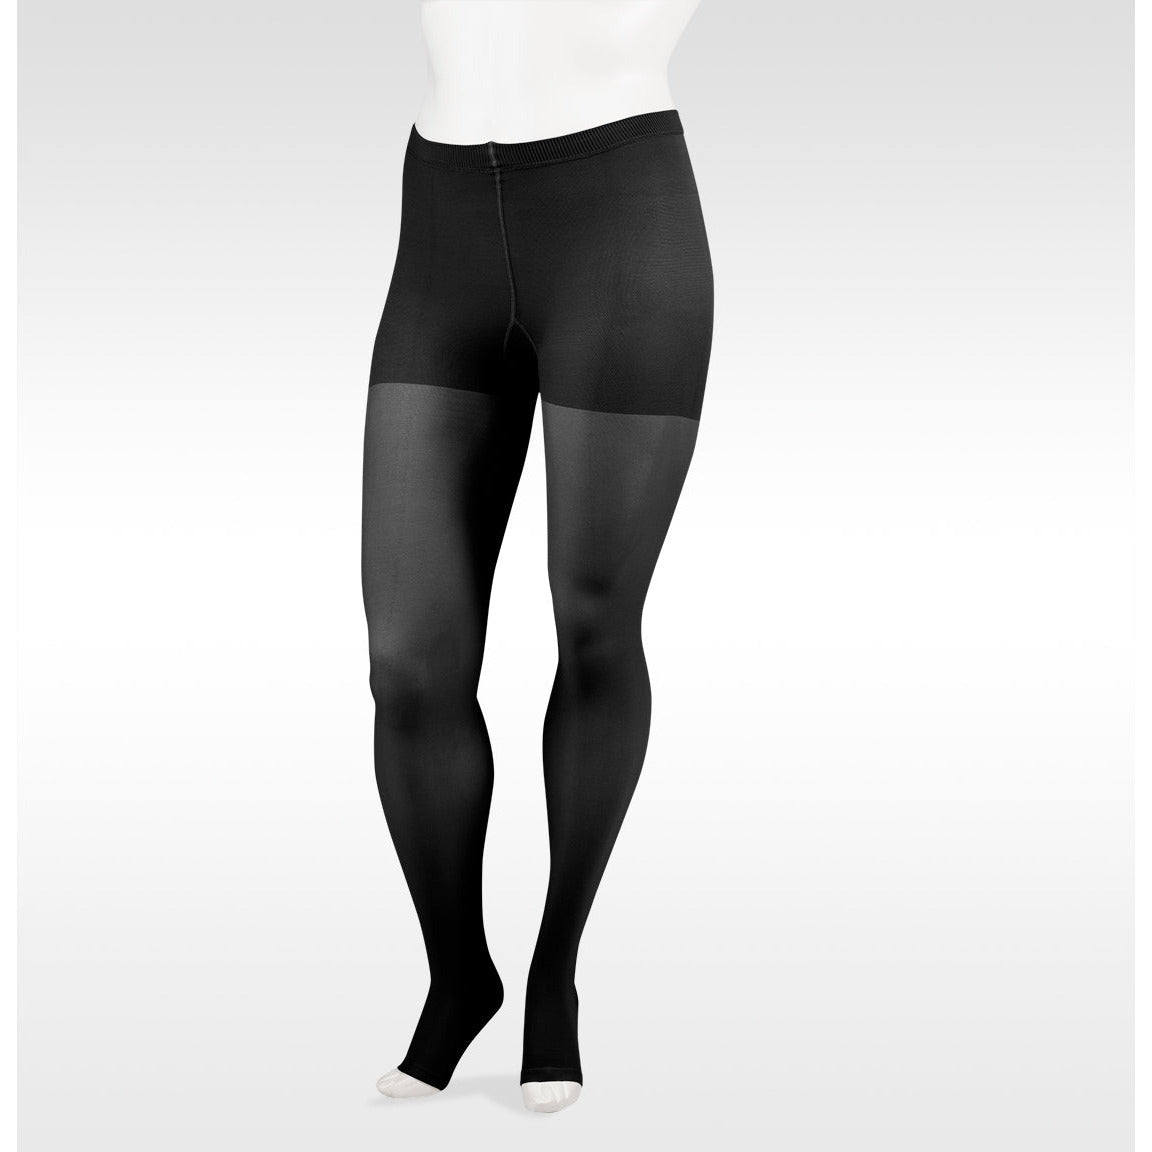 Juzo Soft Pantyhose 20-30 mmhg w/ Elastic Panty, Open Toe, Black